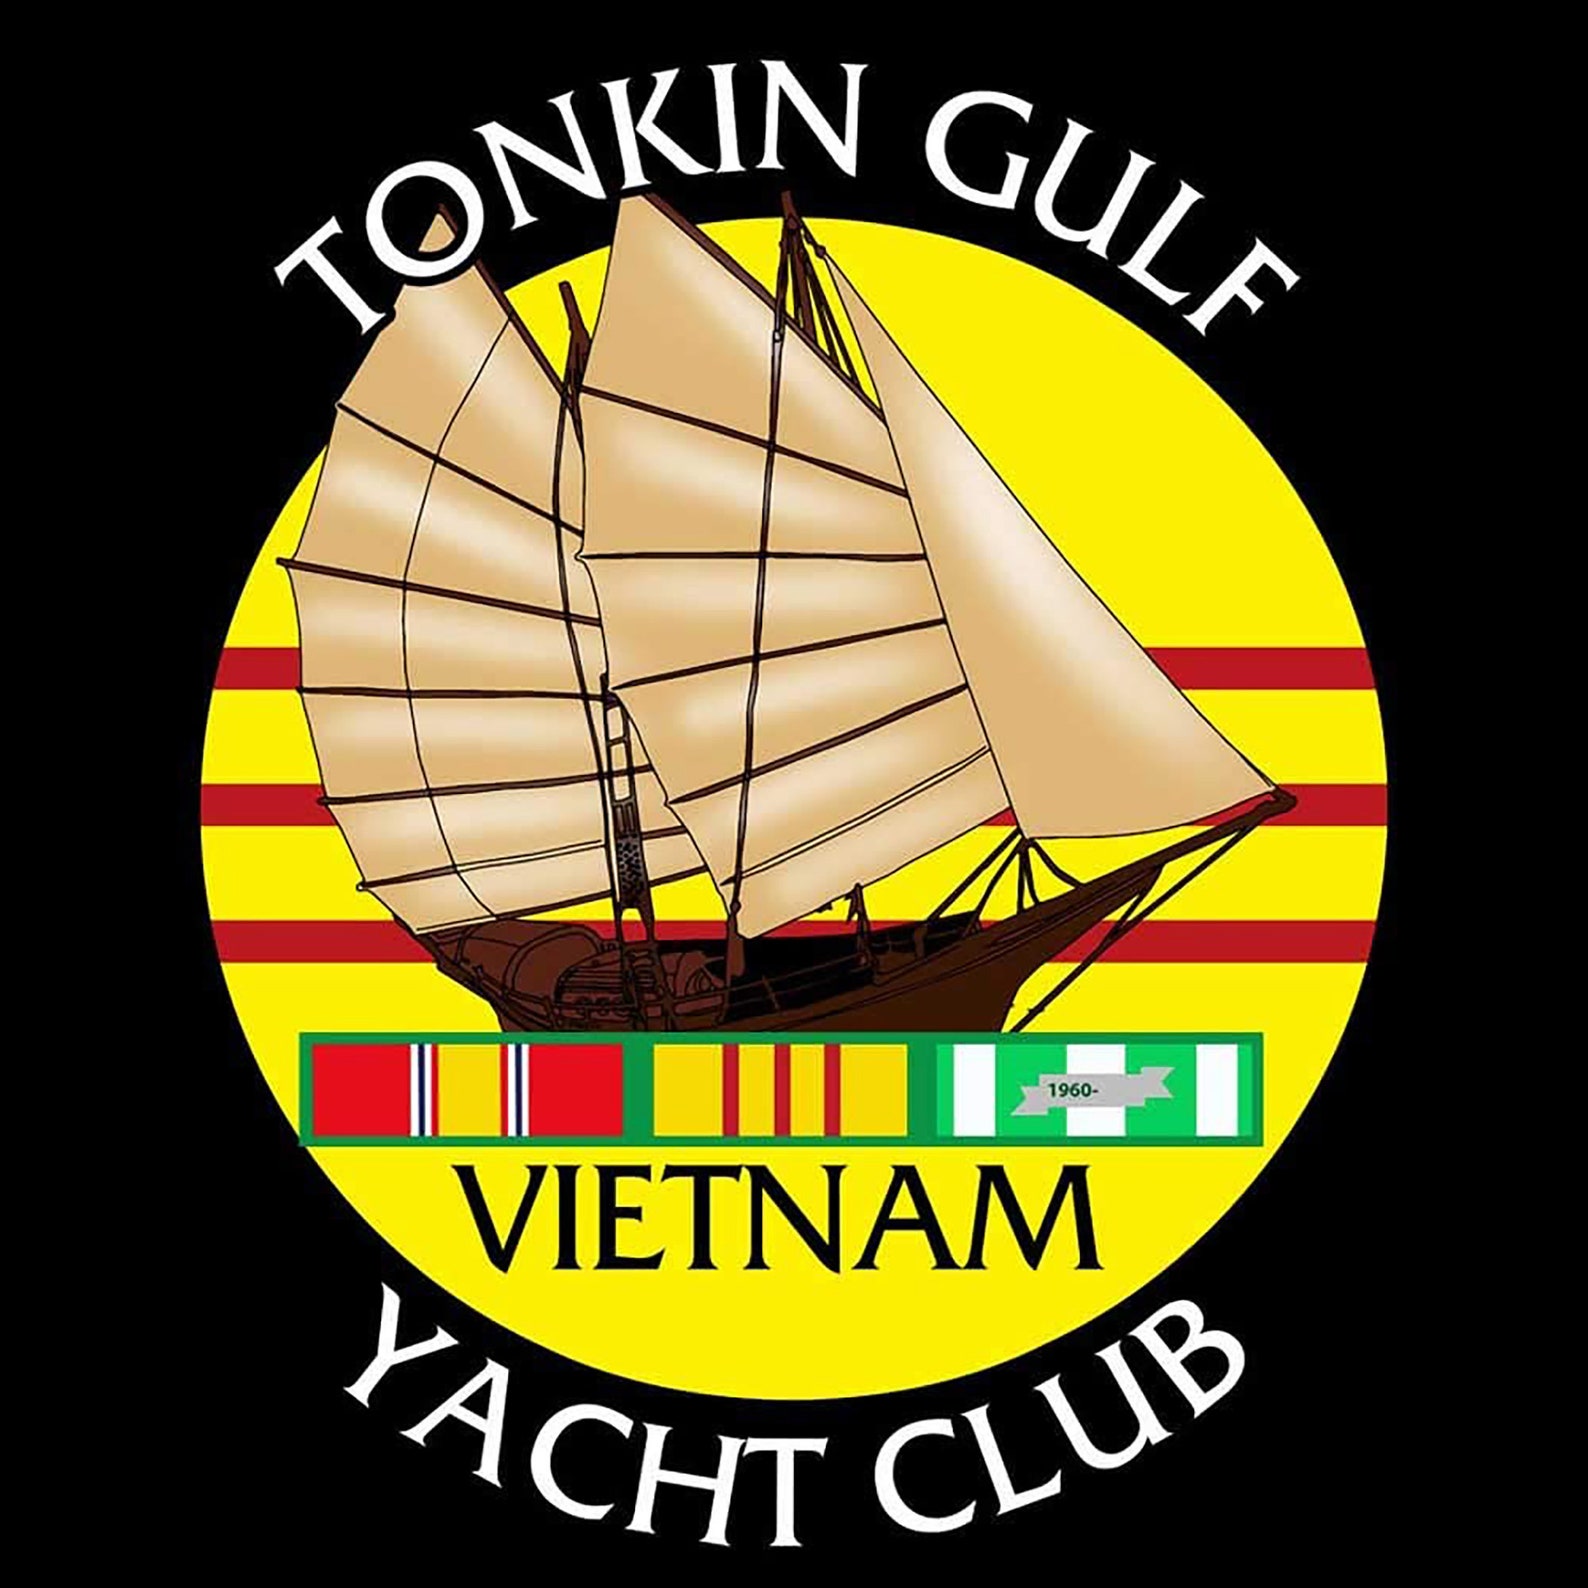 tonkin gulf yacht club